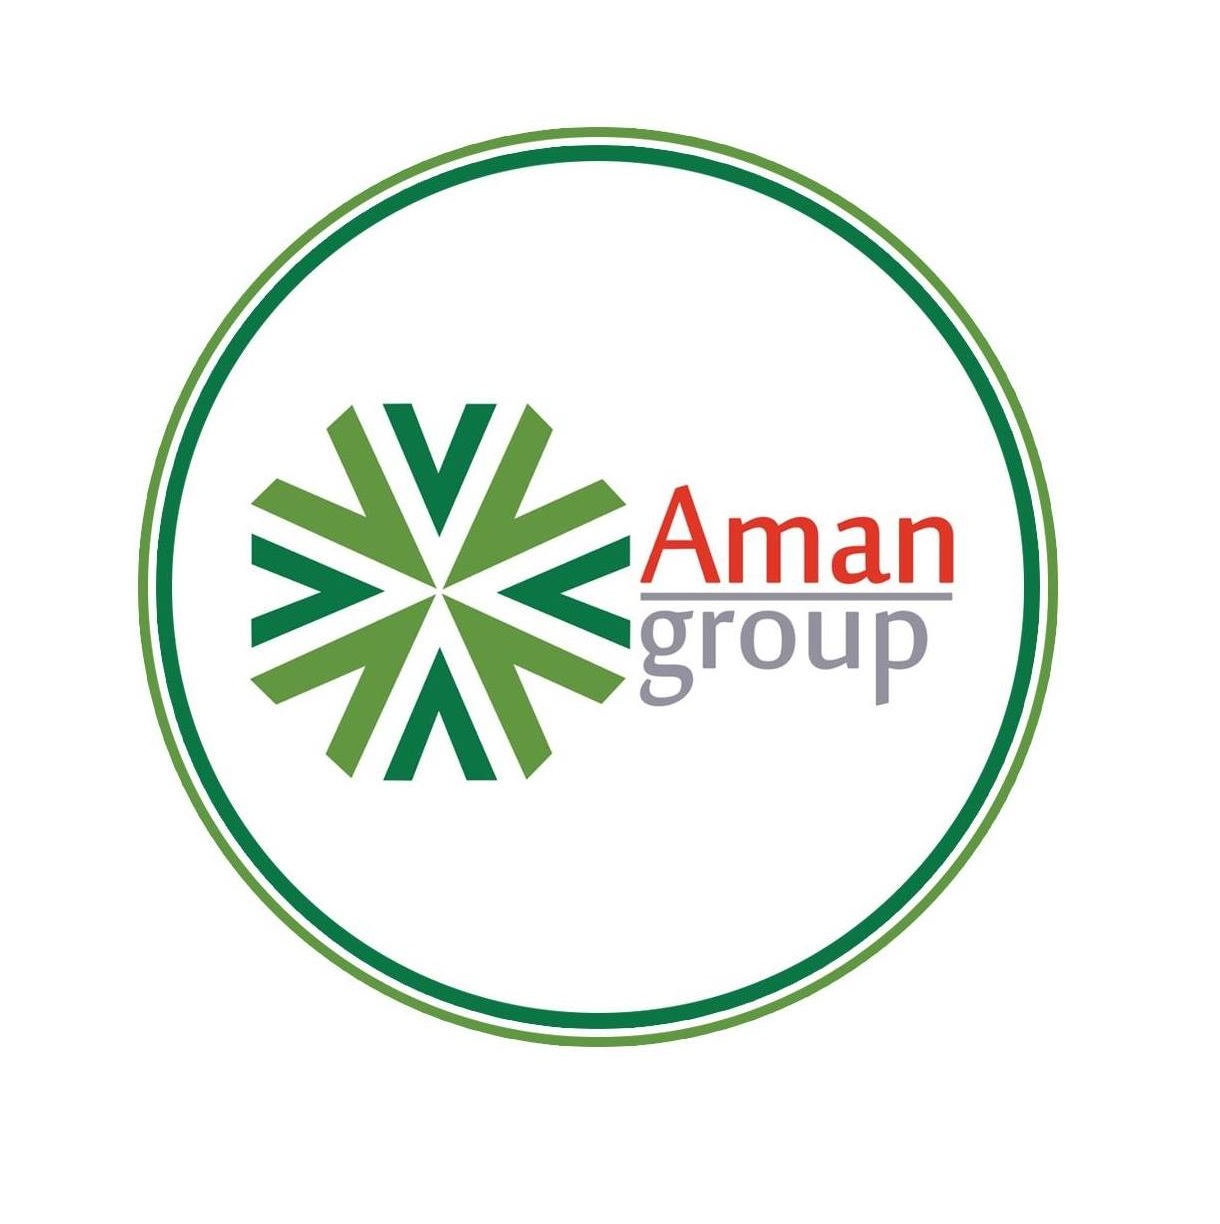 Aman Group